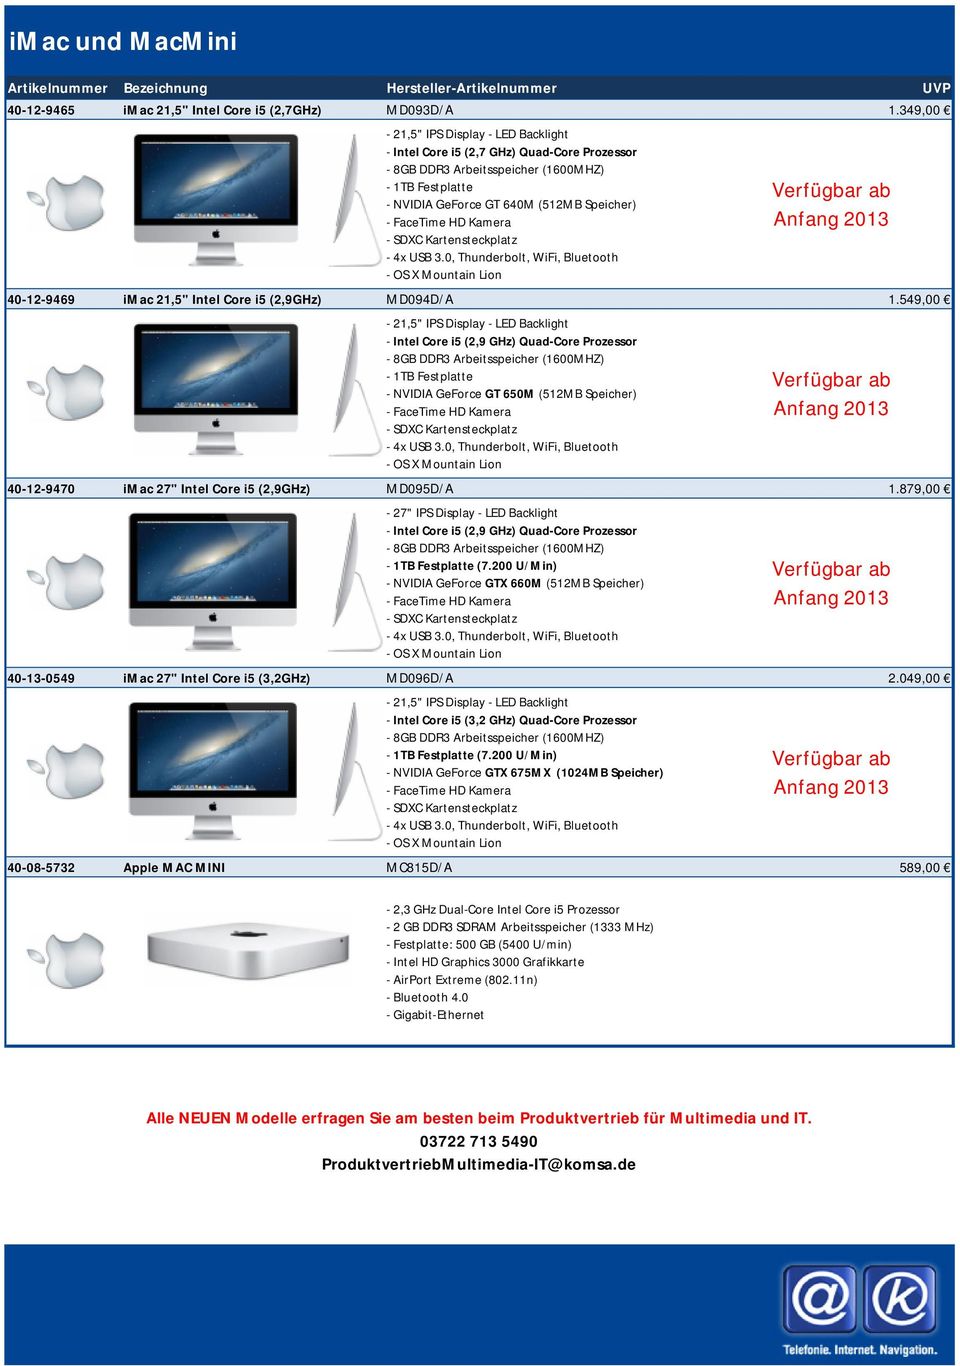 Kamera - SDXC Kartensteckplatz - 4x USB 3.0, Thunderbolt, WiFi, Bluetooth - OS X Mountain Lion 40-12-9469 imac 21,5" Intel Core i5 (2,9GHz) MD094D/A 1.